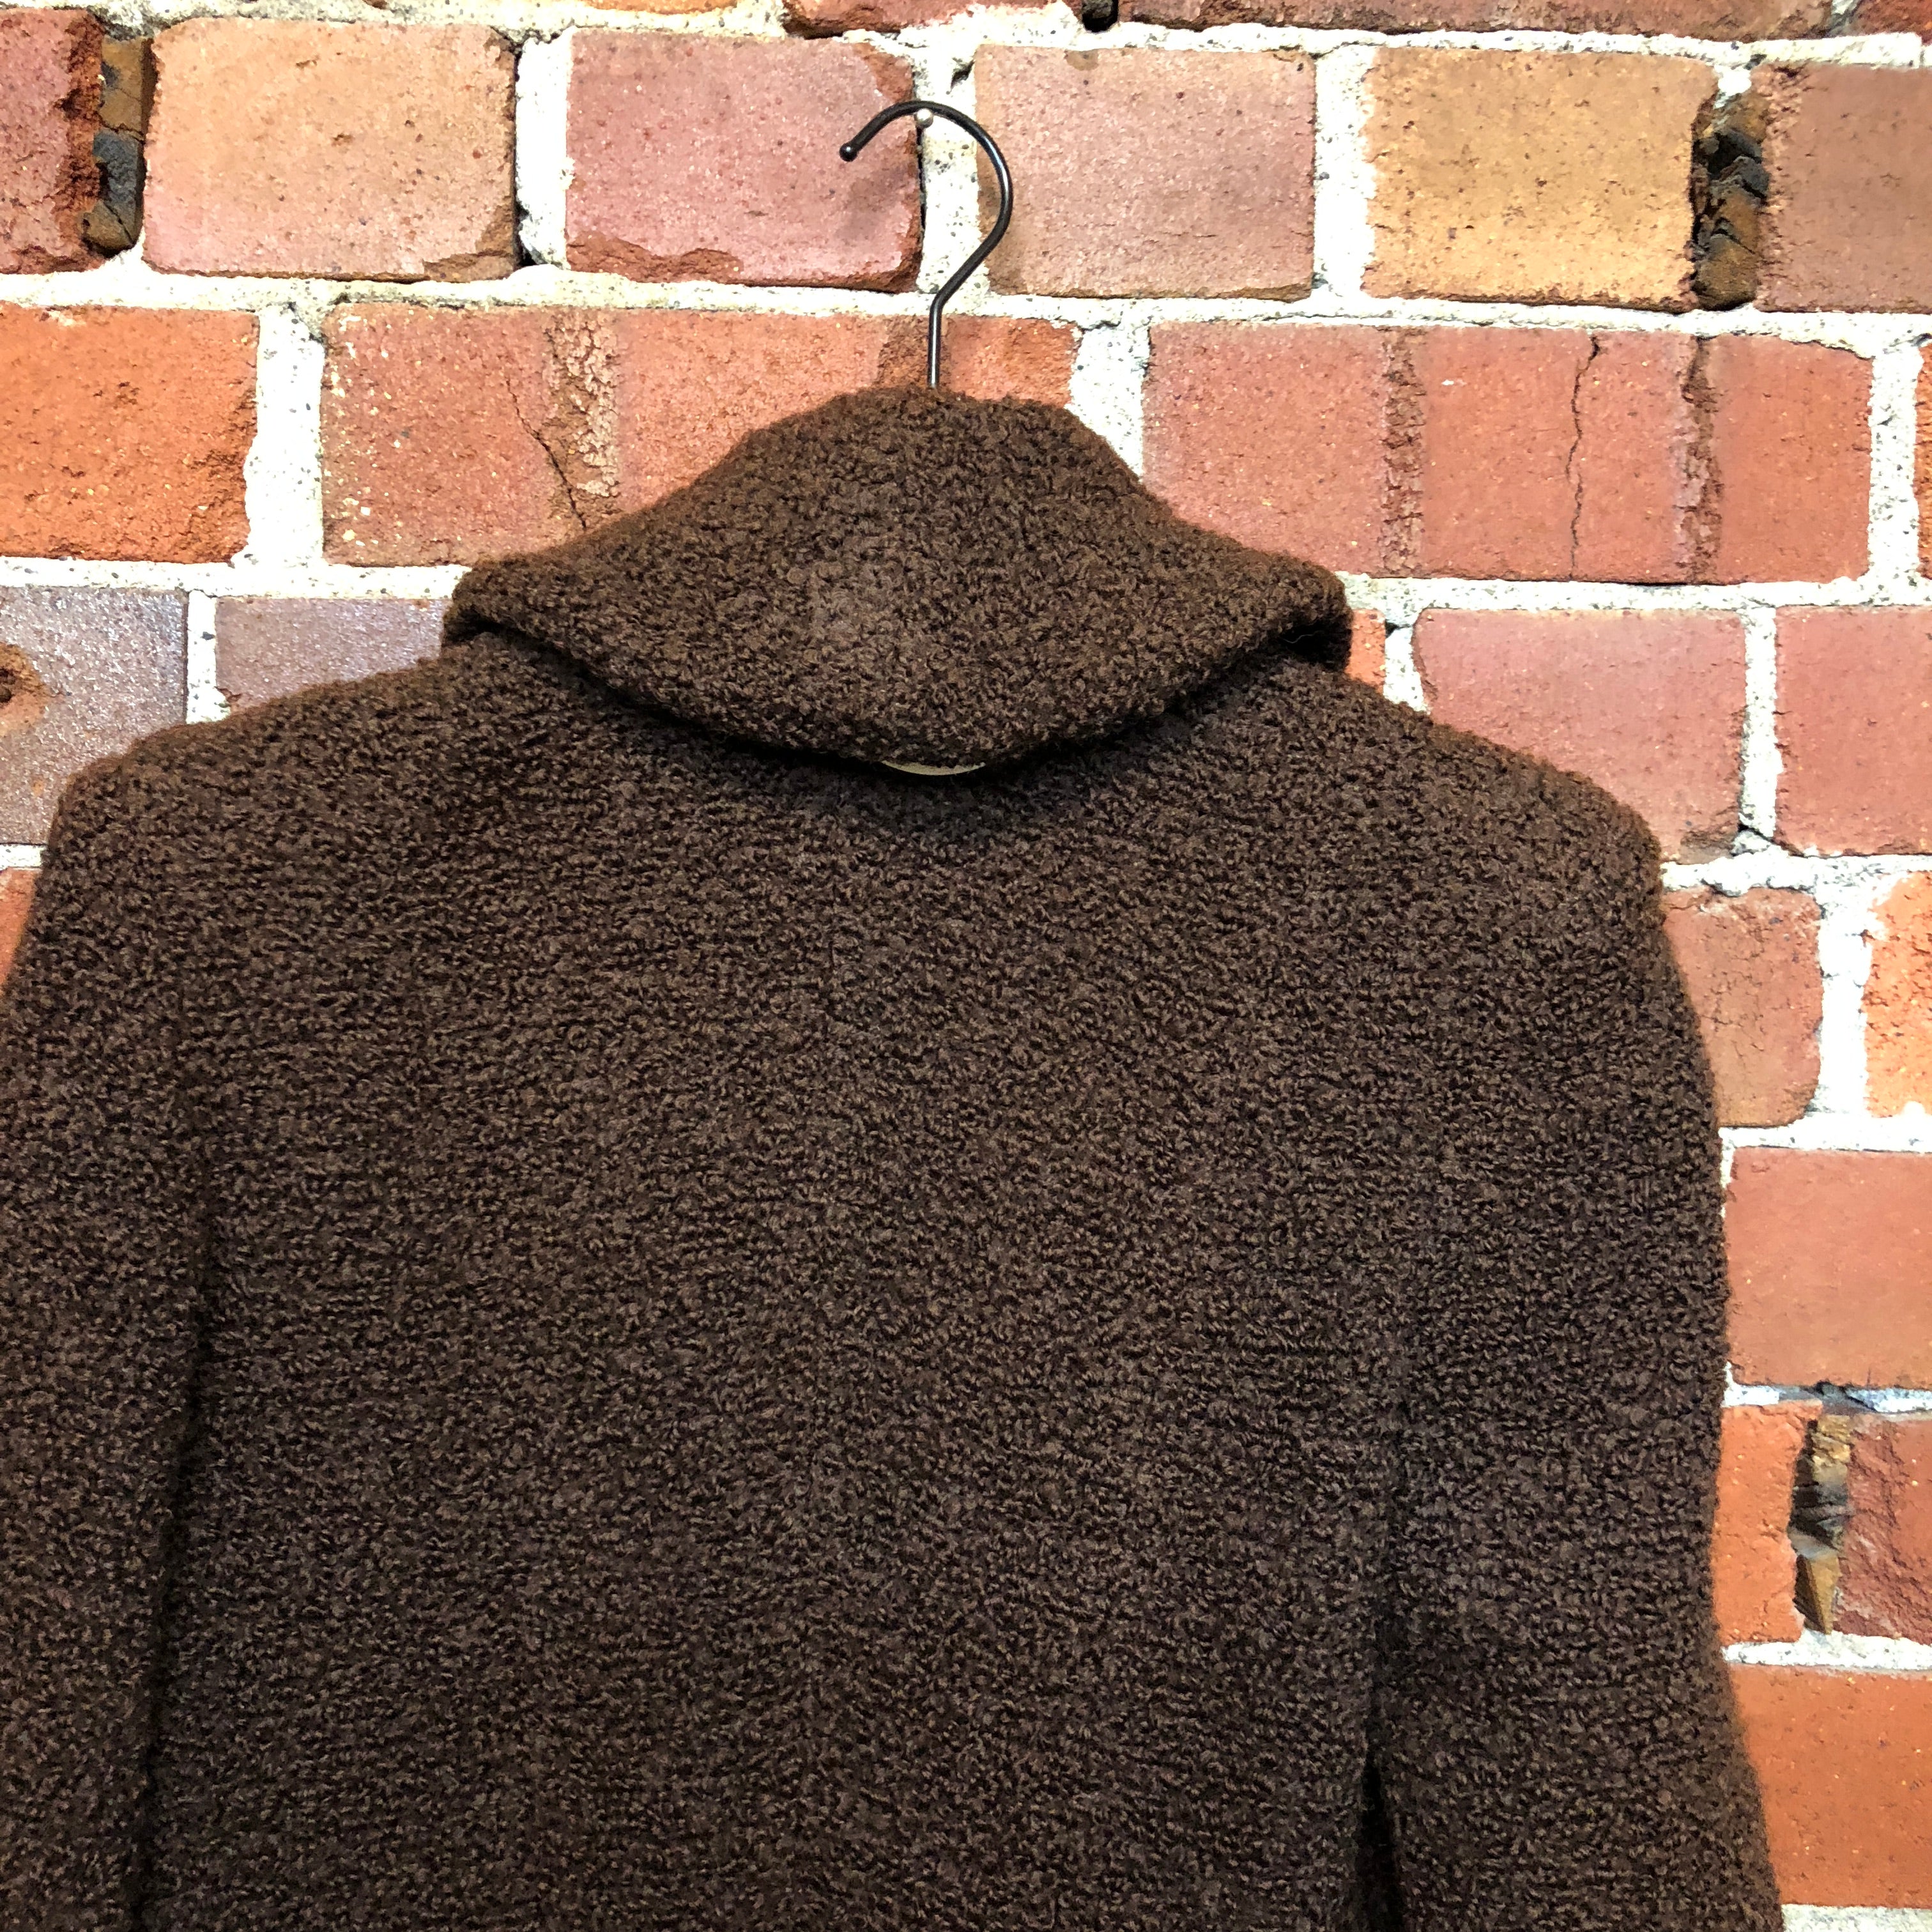 1940s wool boucle coat